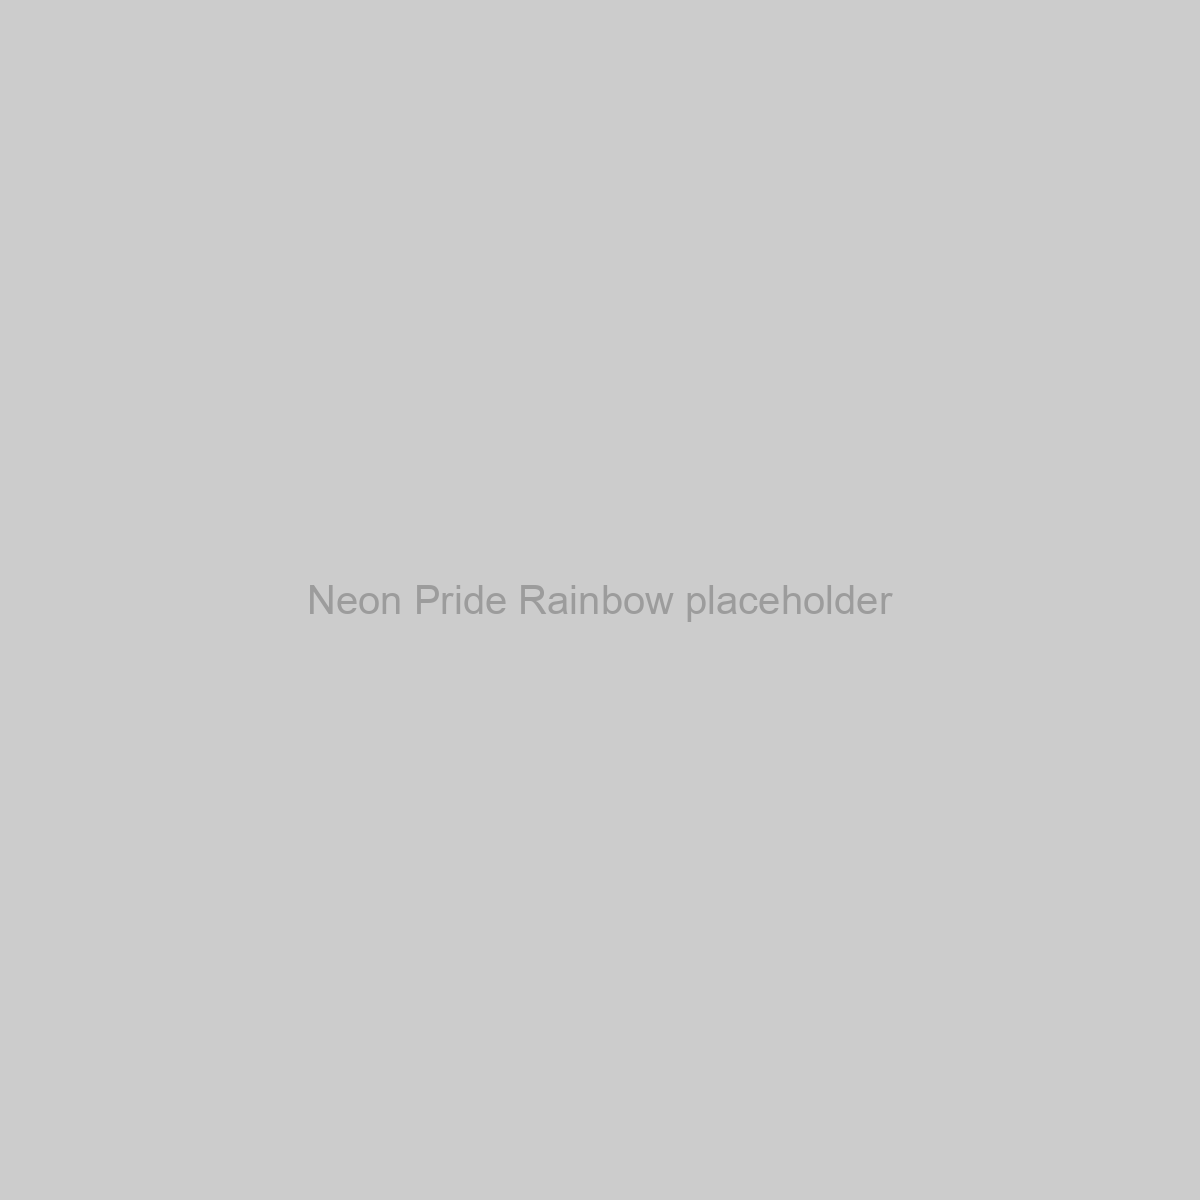 Neon Pride Rainbow Placeholder Image